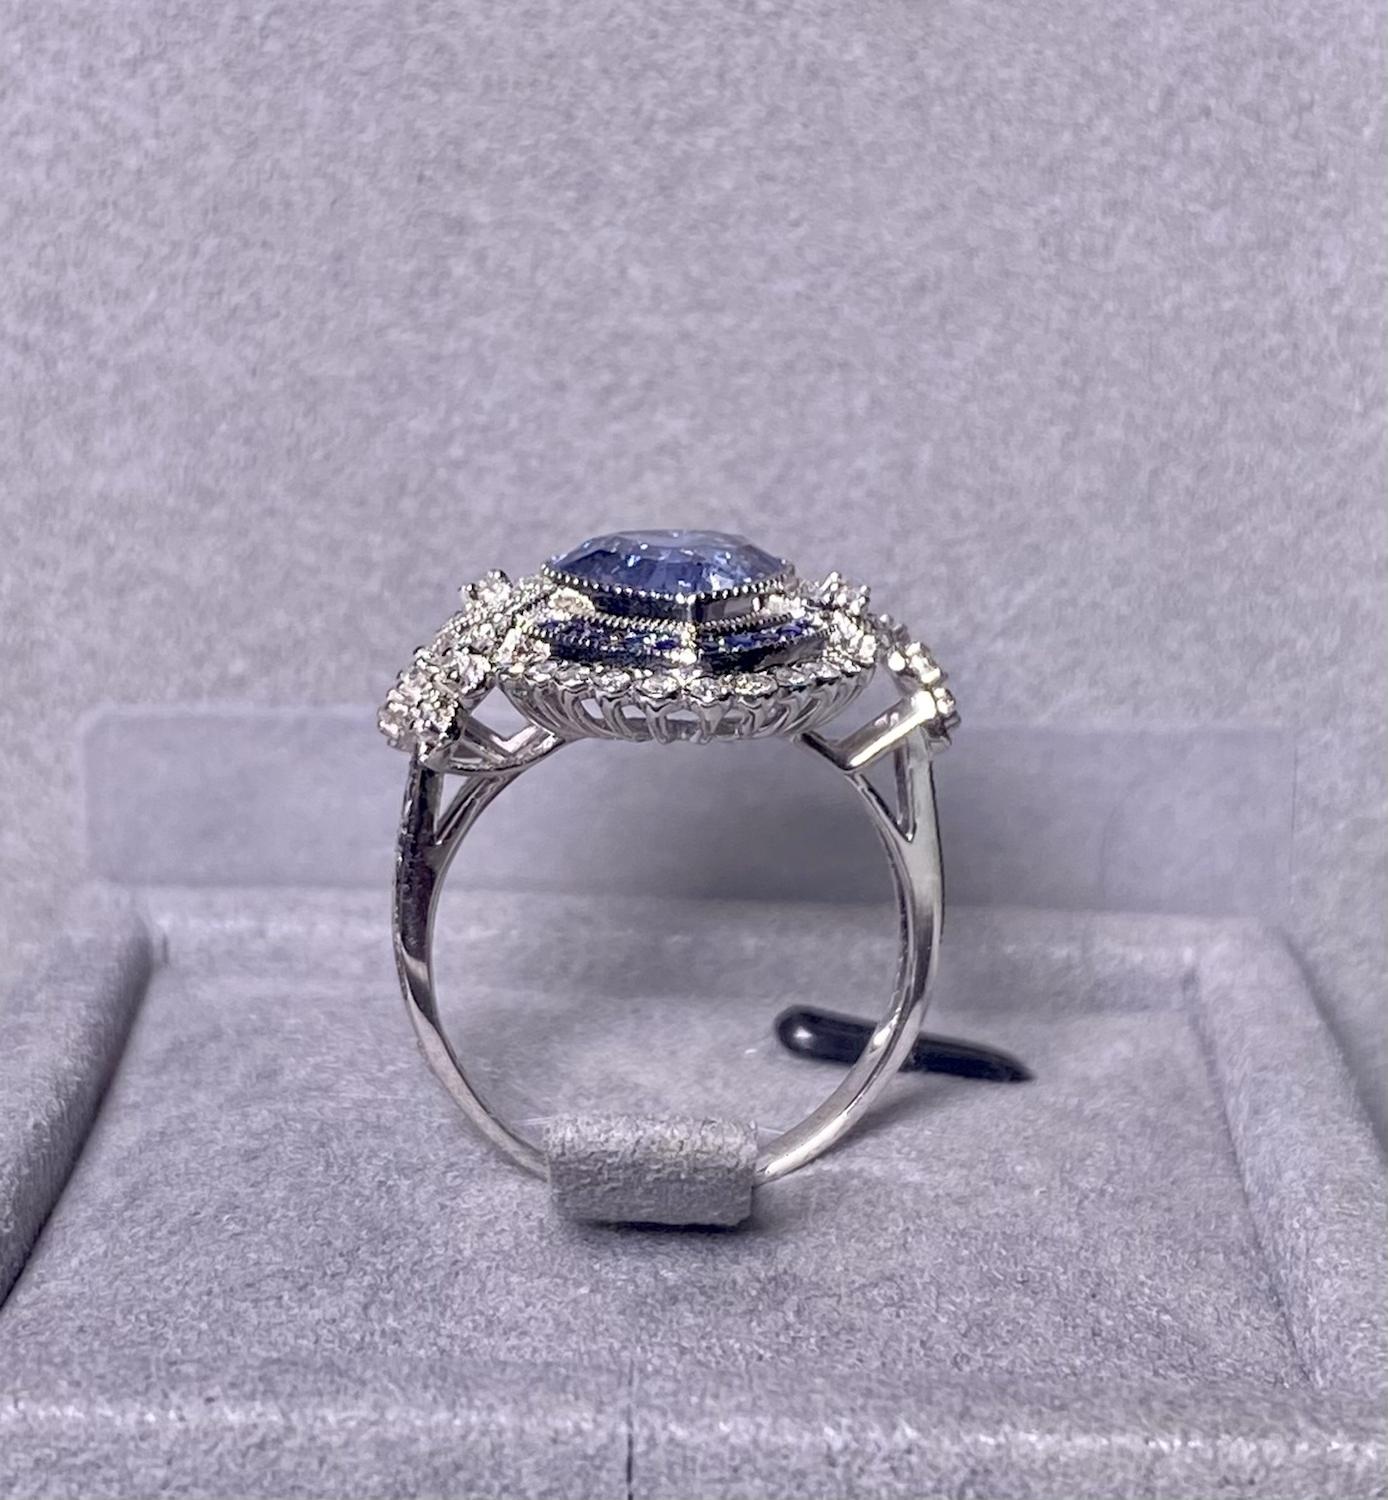 Brilliant Cut 2.49ct Sapphire and Diamond Ring in 18k White Gold